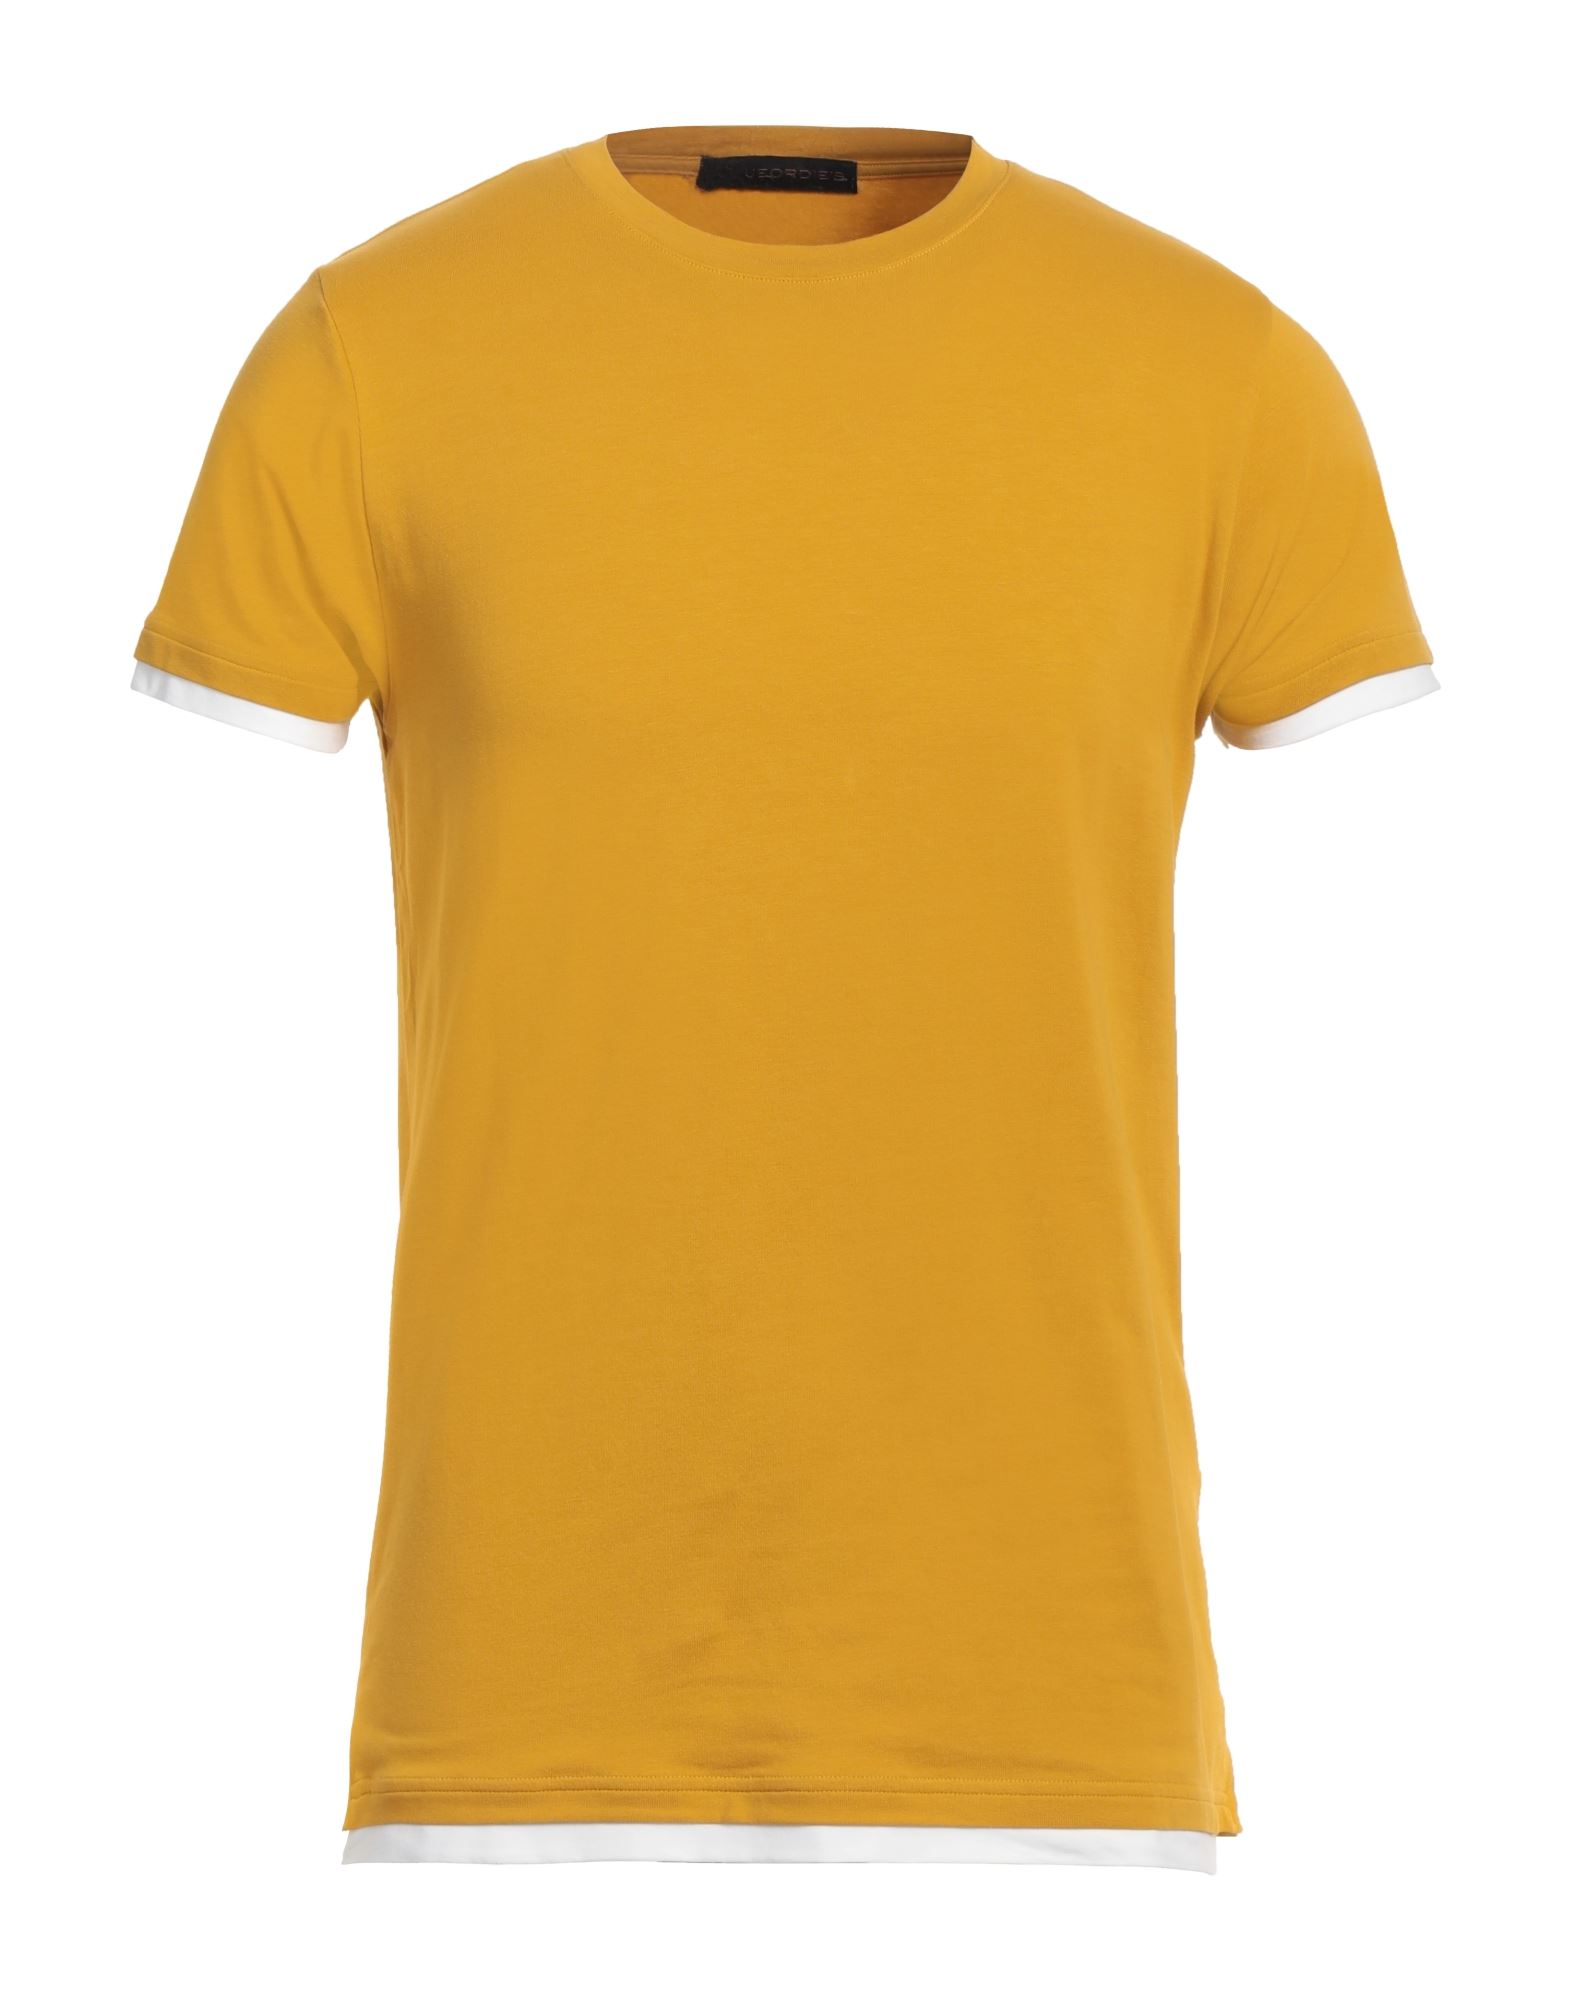 Jeordie's Man T-shirt Mustard Size S Cotton, Elastane In Yellow